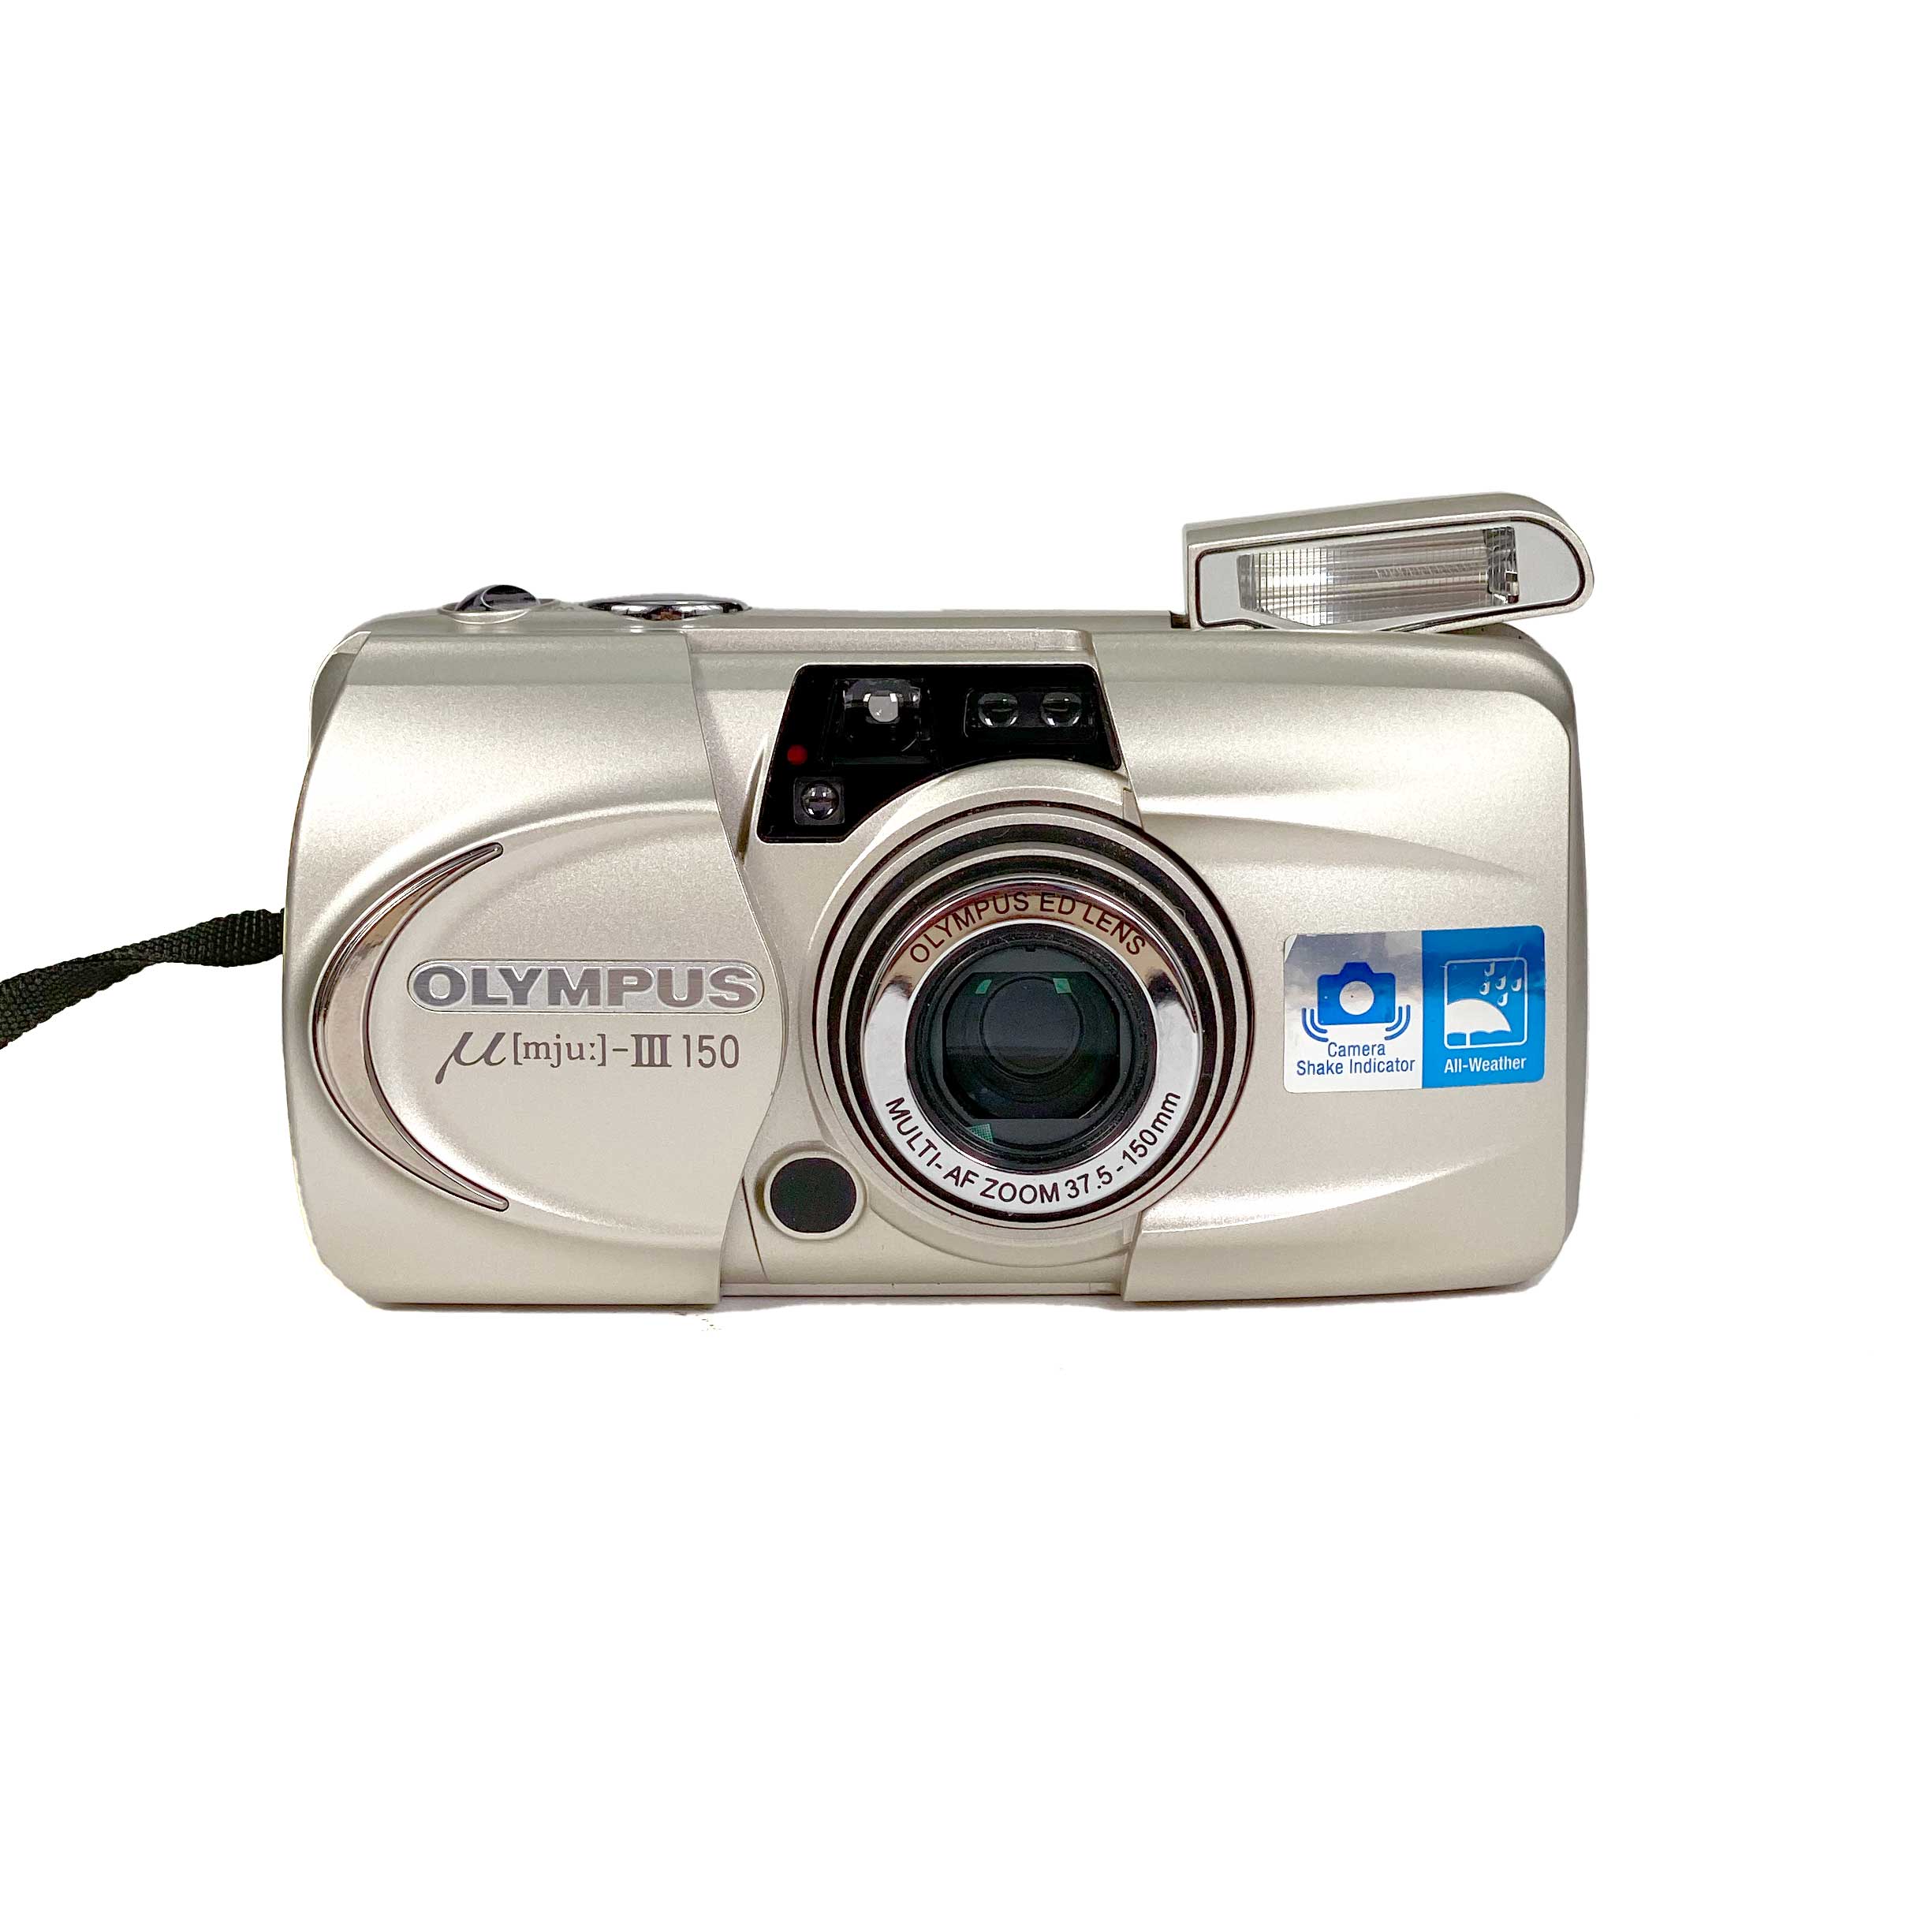 Olympus µ MJU-III 150* - The Camera Trader